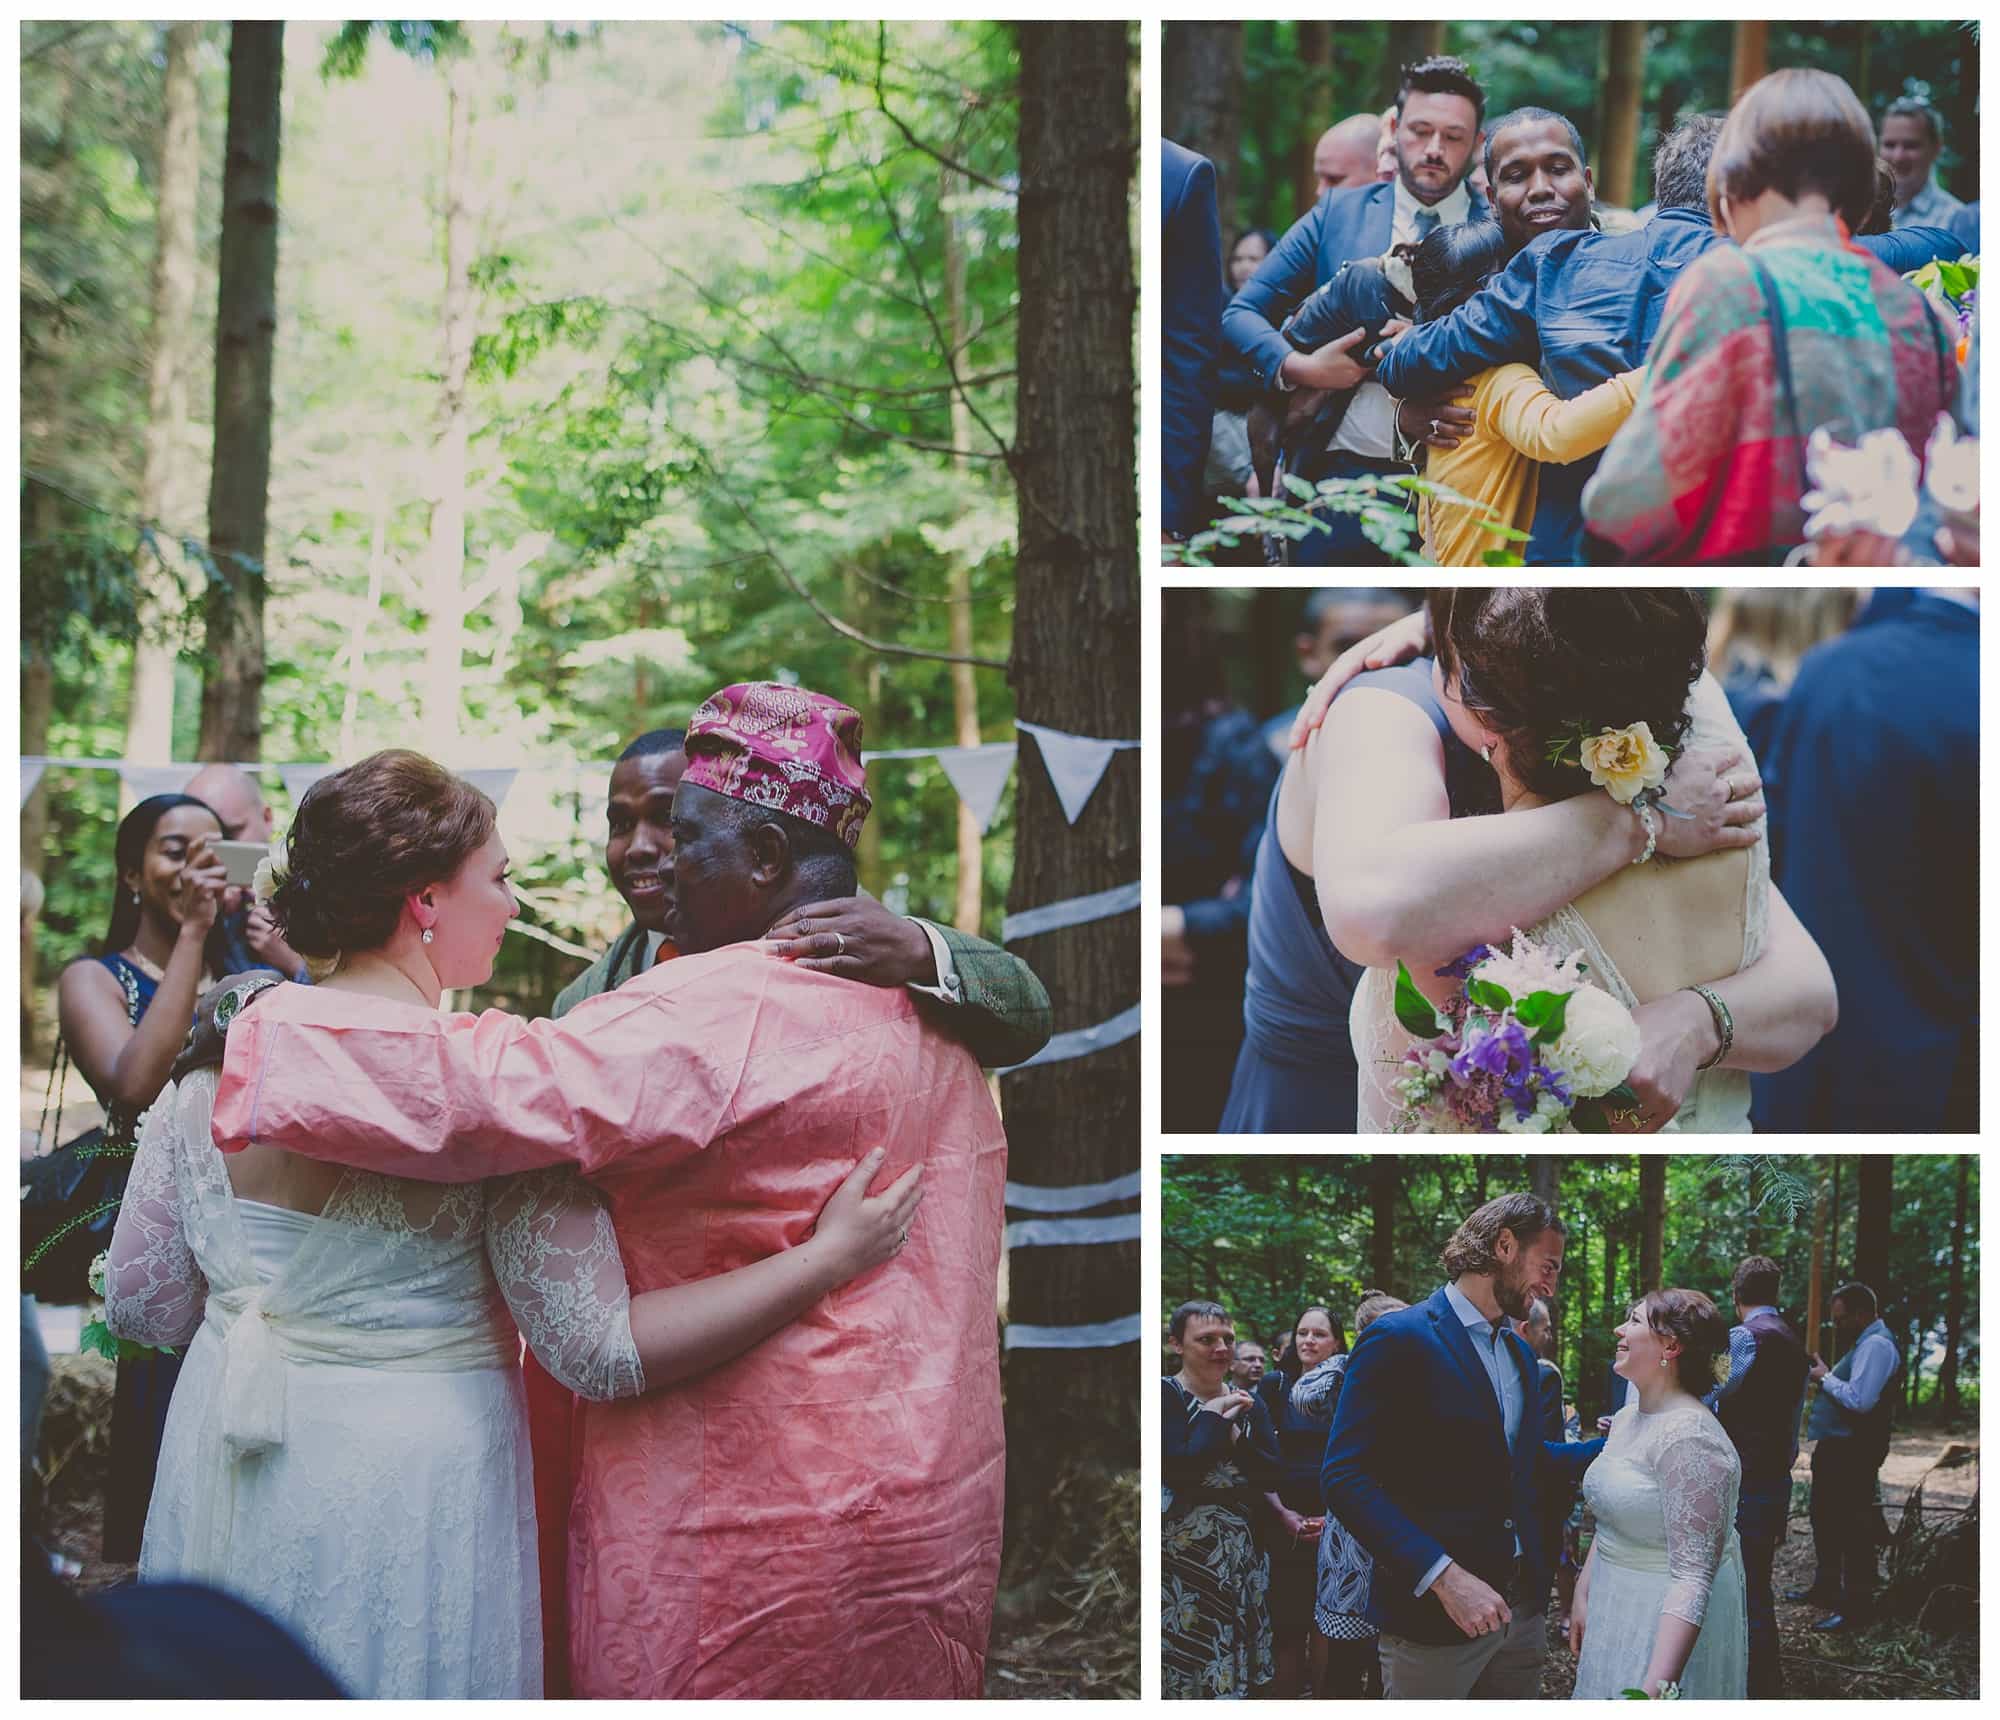 staffordshire wedding photographer woodland forest wedding boho wedding outdoor wedding